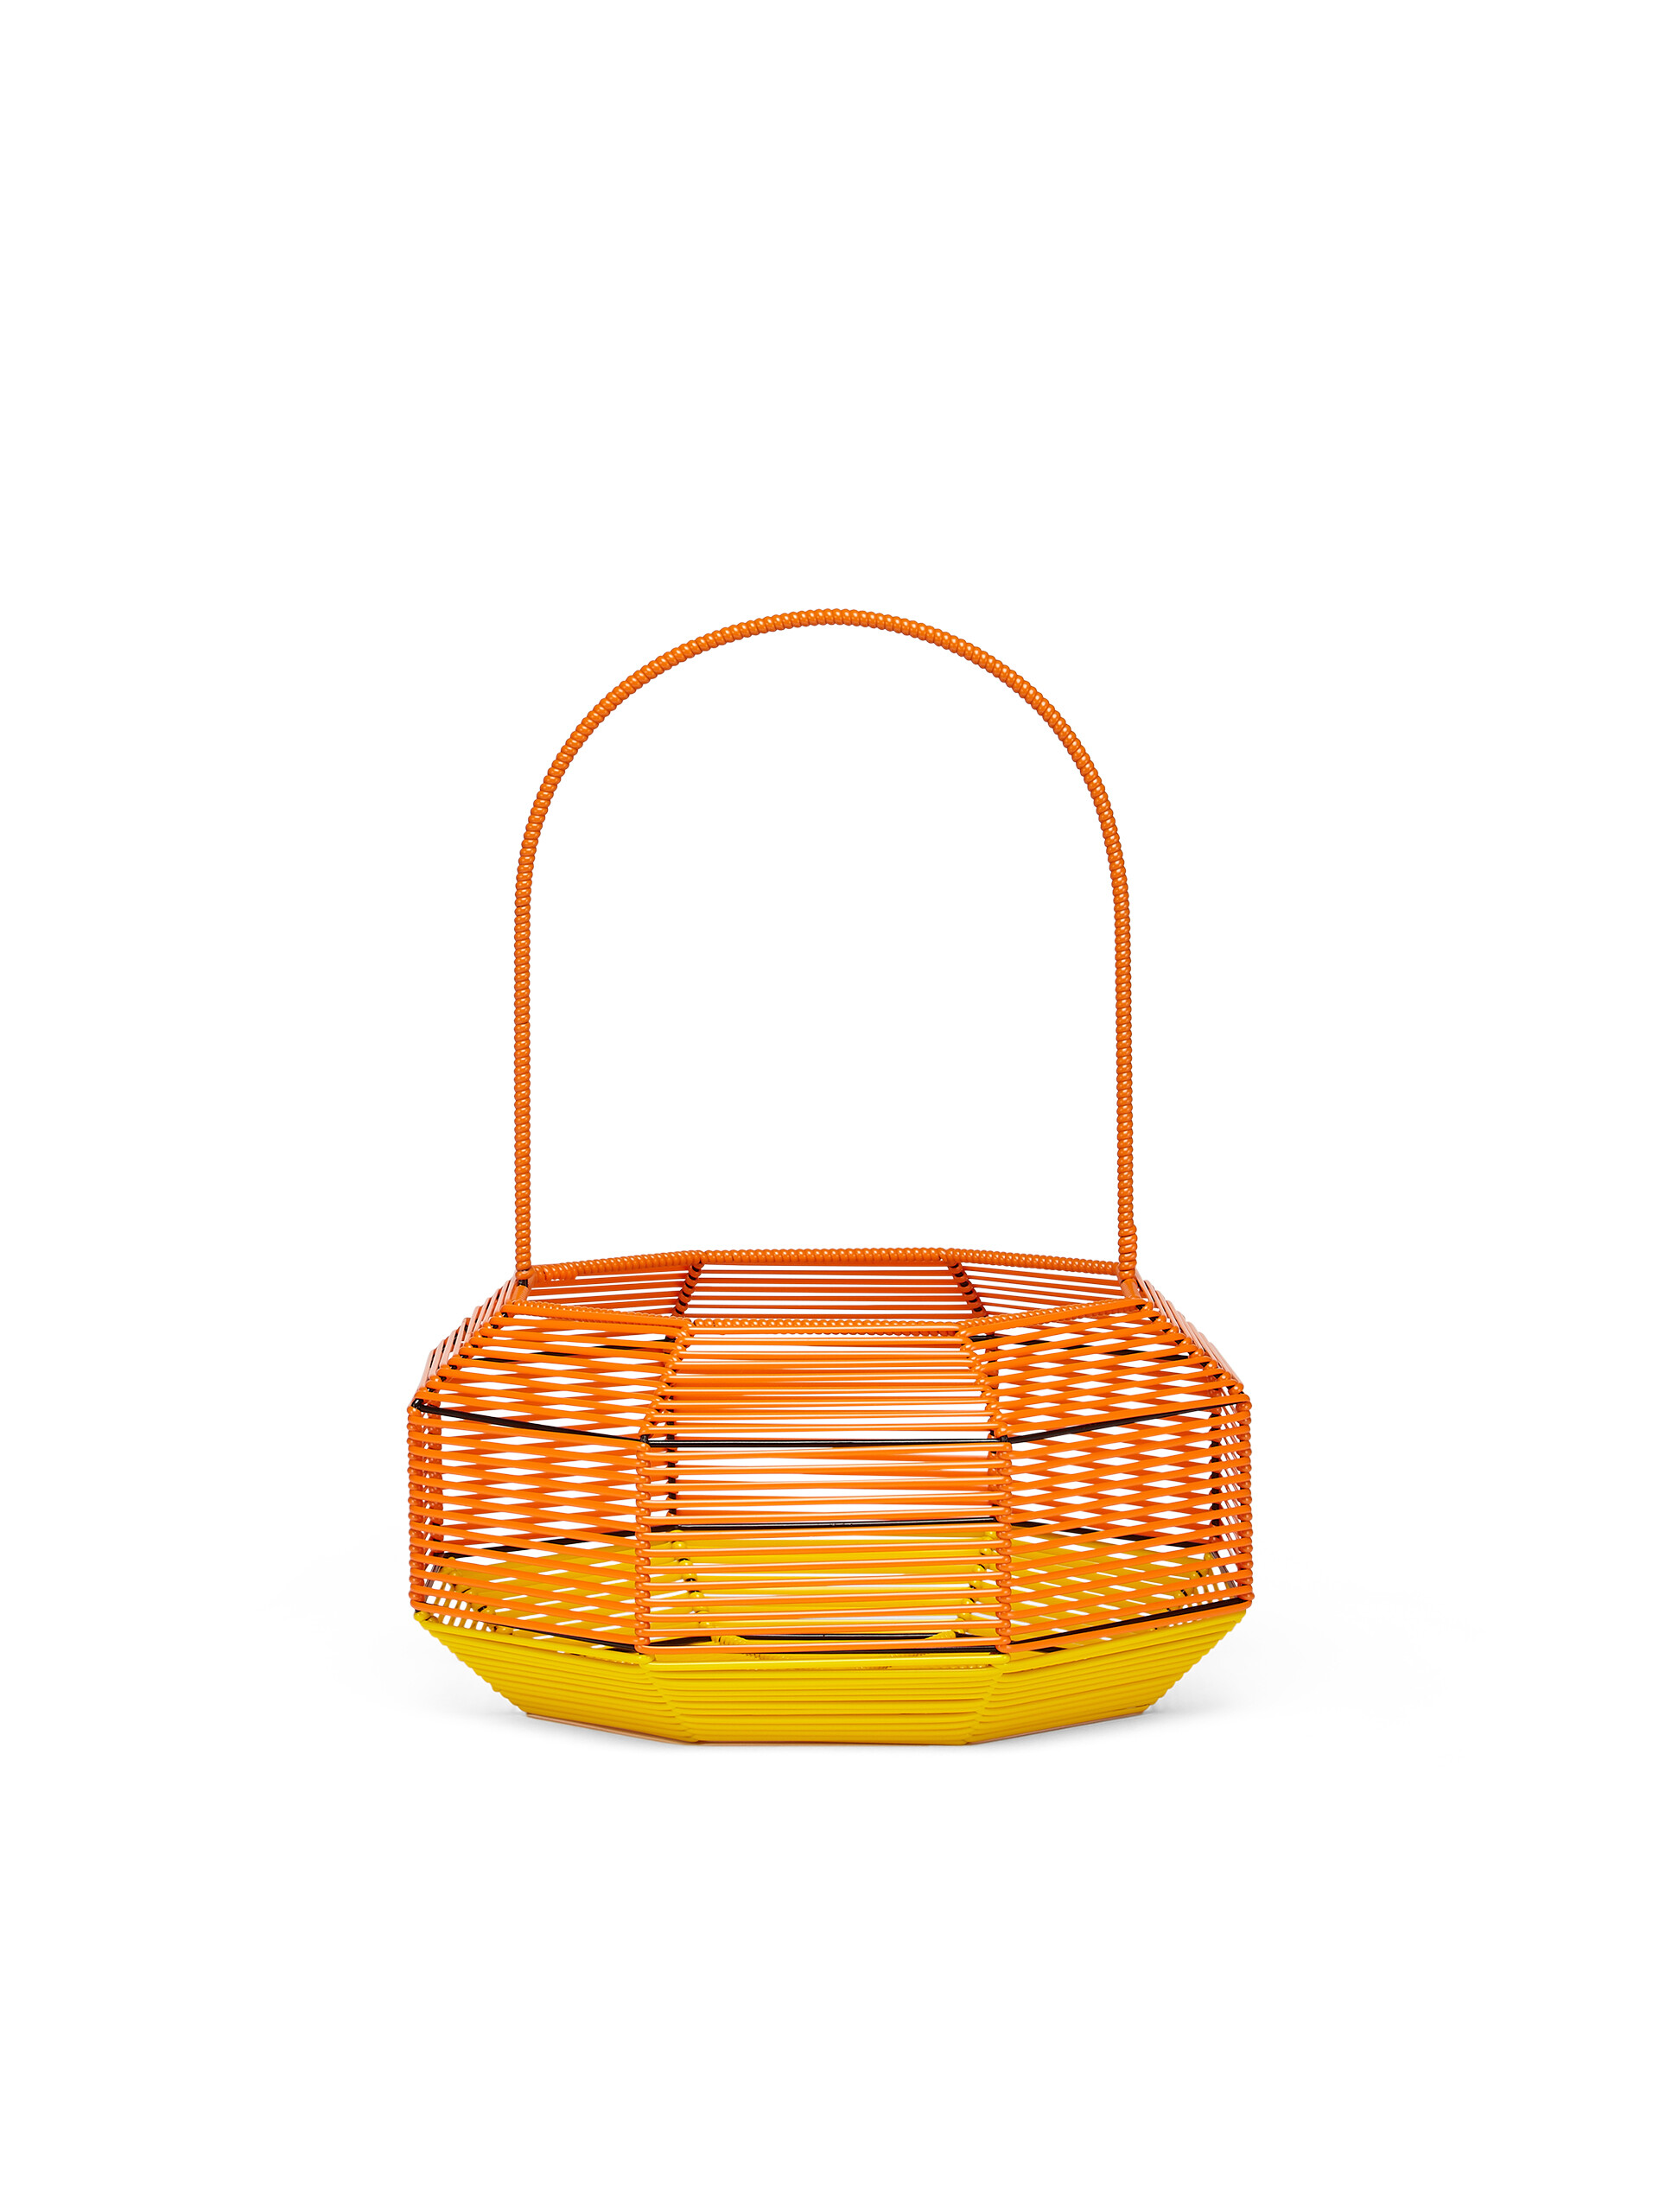 MARNI MARKET octagonal basket - Furniture - Image 3